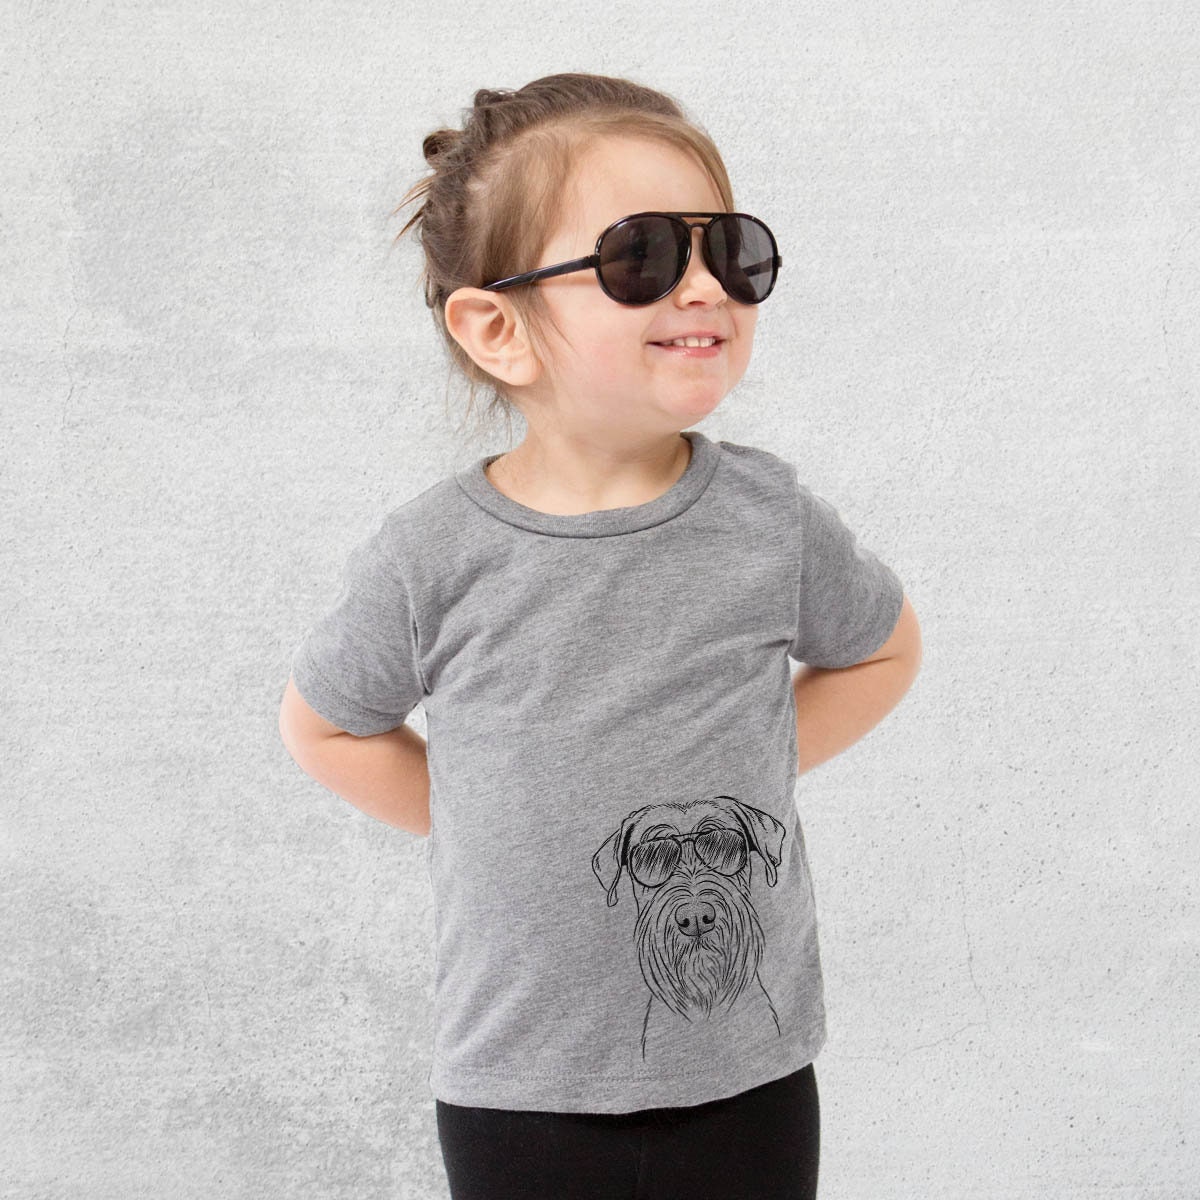 Milton The Standard Schnauzer - Tri-Blend Shirt Kids Dog Tshirt Animal Glasses T